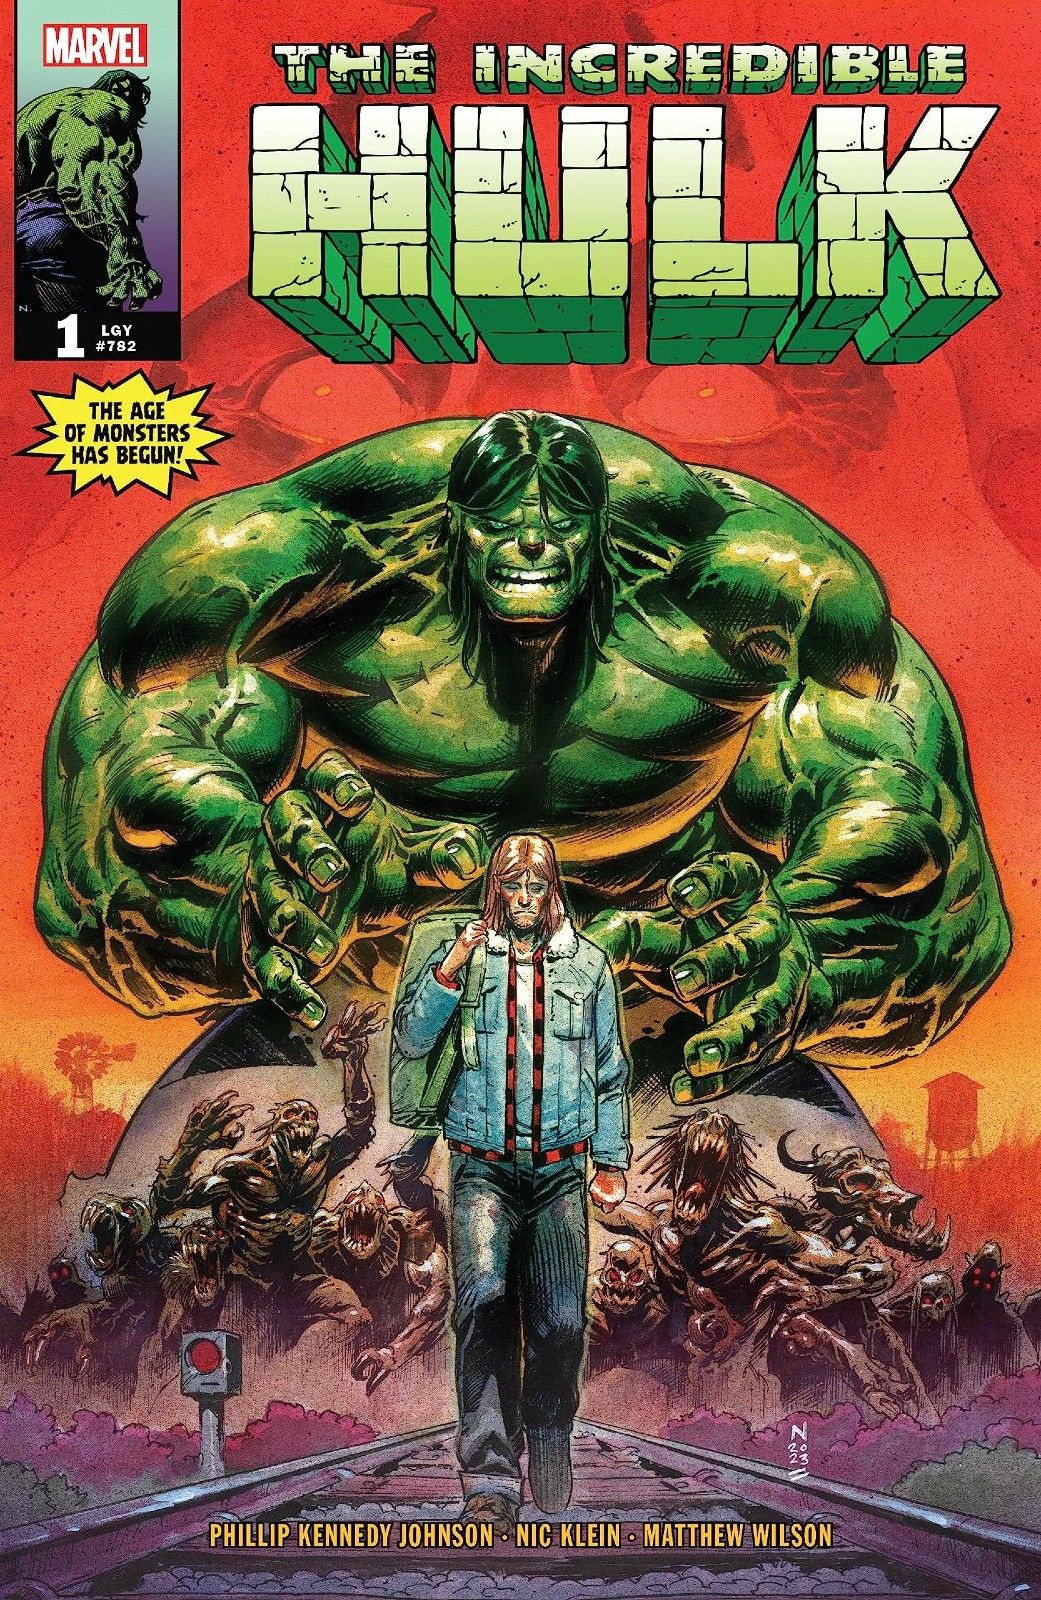 The Hulks looks down on Bruce Banner walking on train tracks in Incredible Hulk (Vol. 4) #1 by Marvel